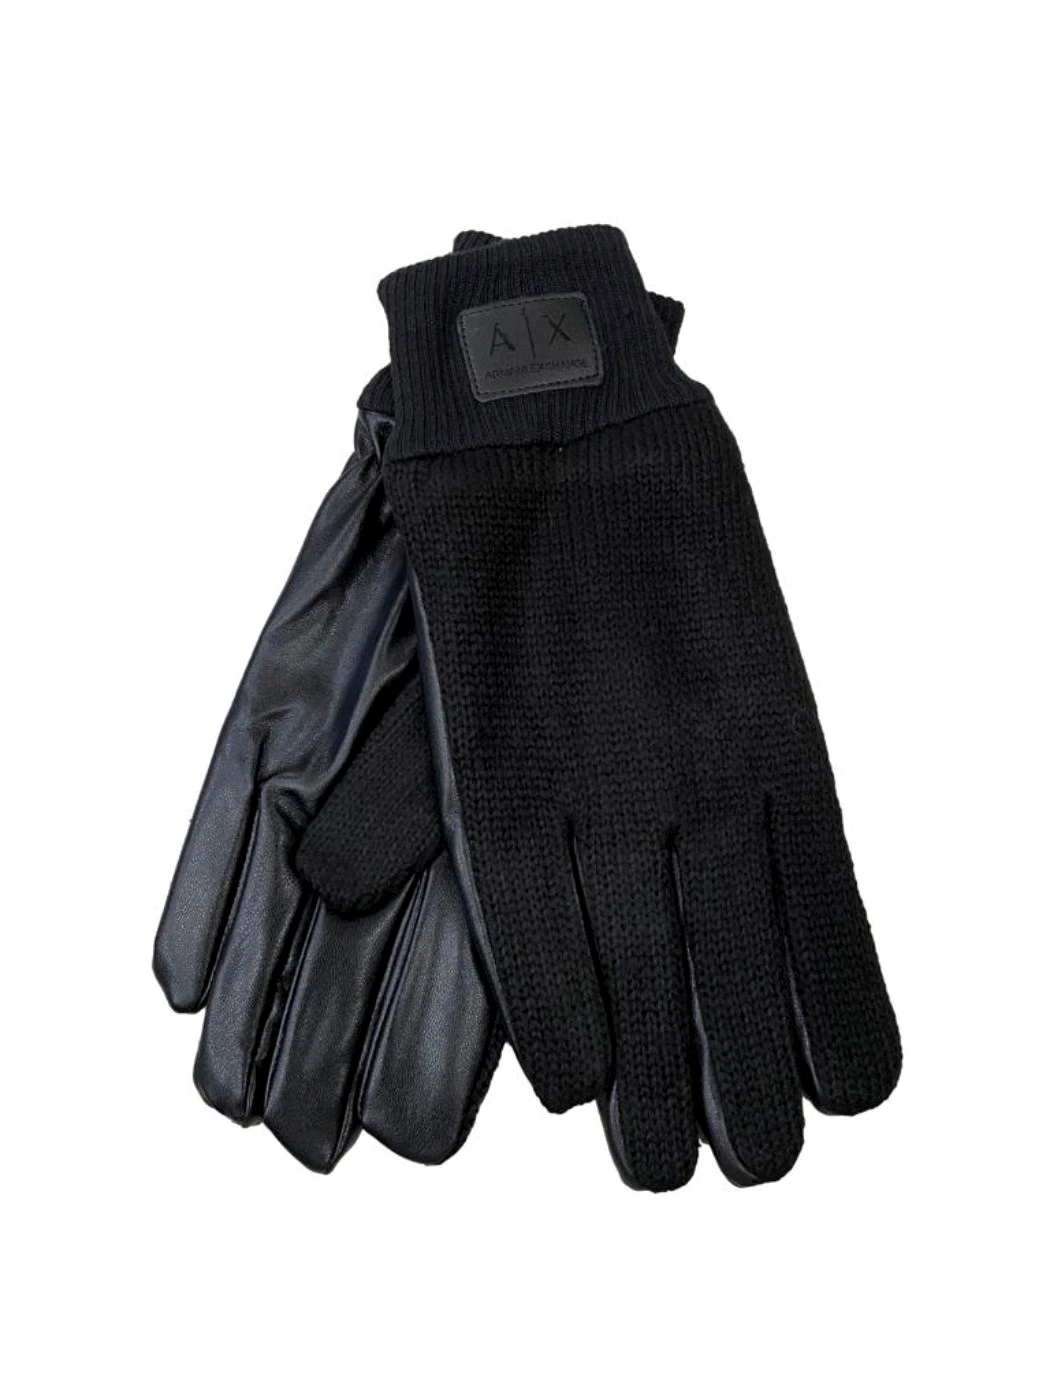 Armani Exchange men's gloves